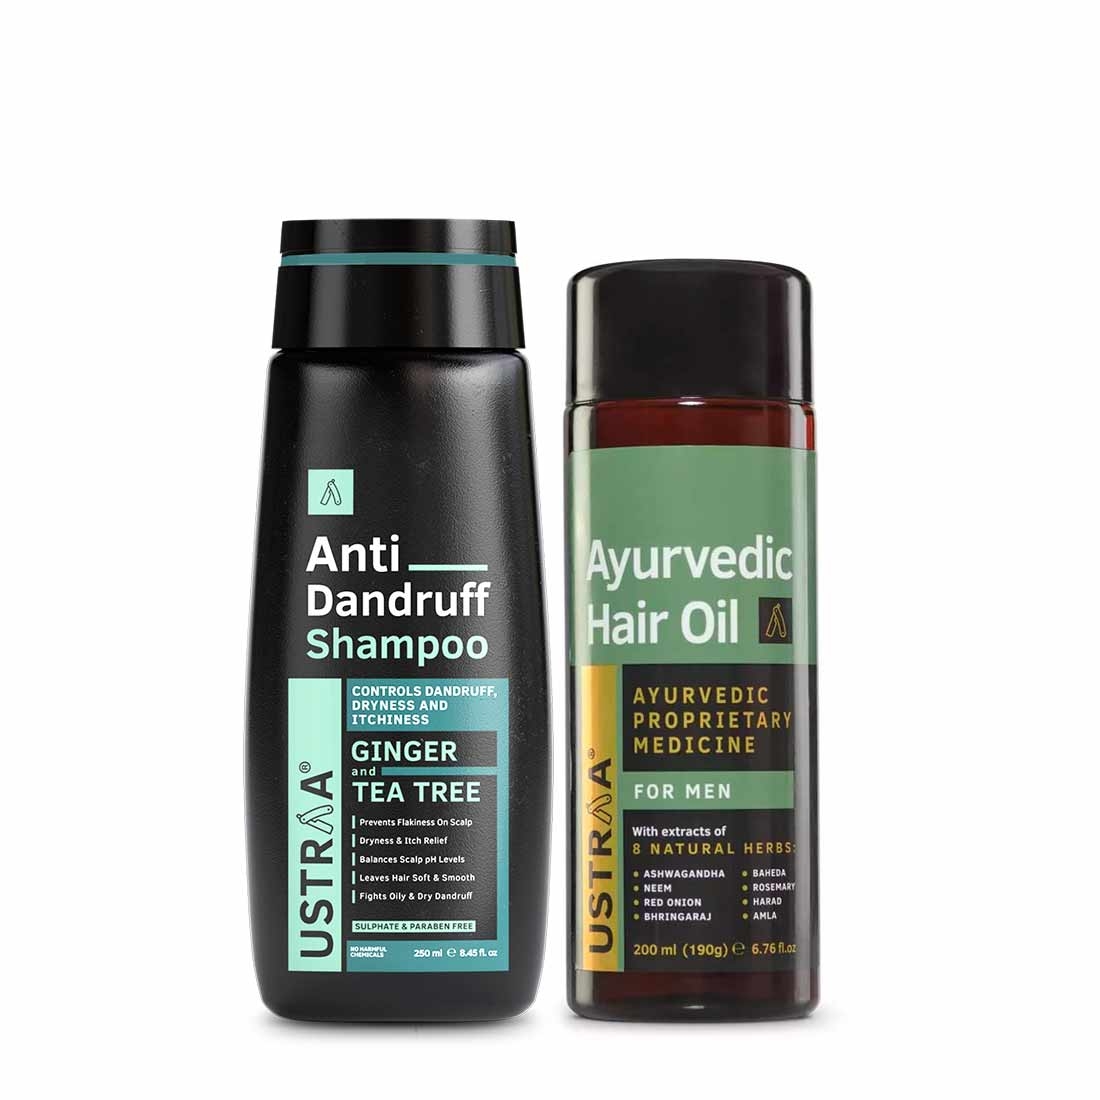 Ustraa Ayurvedic Hair Oil - 200ml & Anti Dandruff Shampoo - 250ml